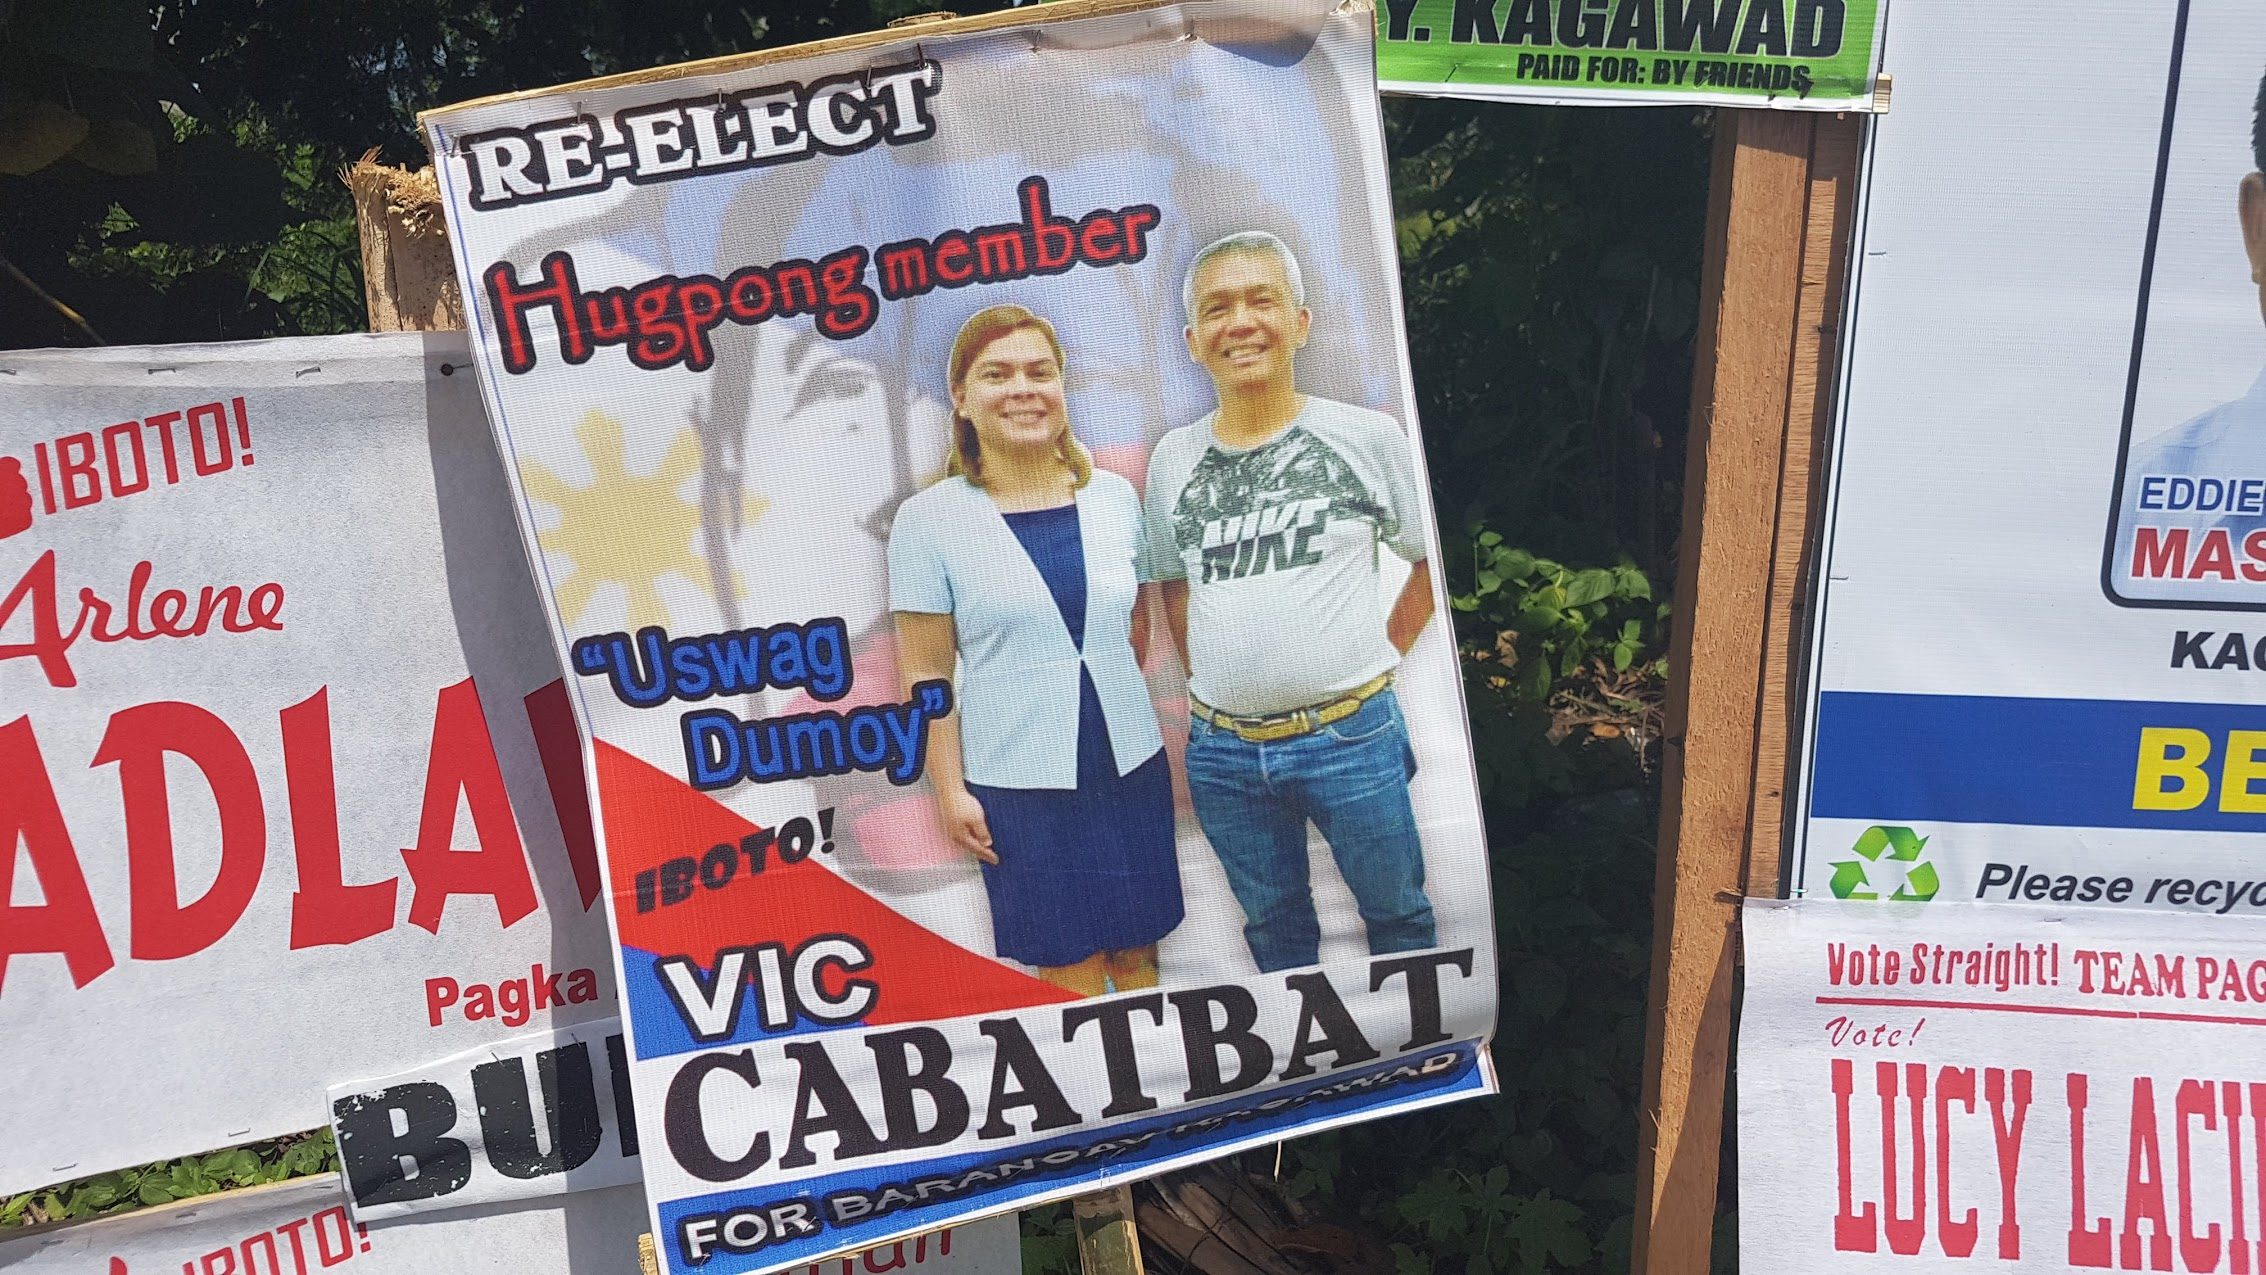 HUGPONG MEMBER. Barangay Dumoy kagawad candidate Vic Cabatbat is seen with Davao City Mayor Sara Duterte in his campaign poster. Photo by Mick Basa/Rappler   